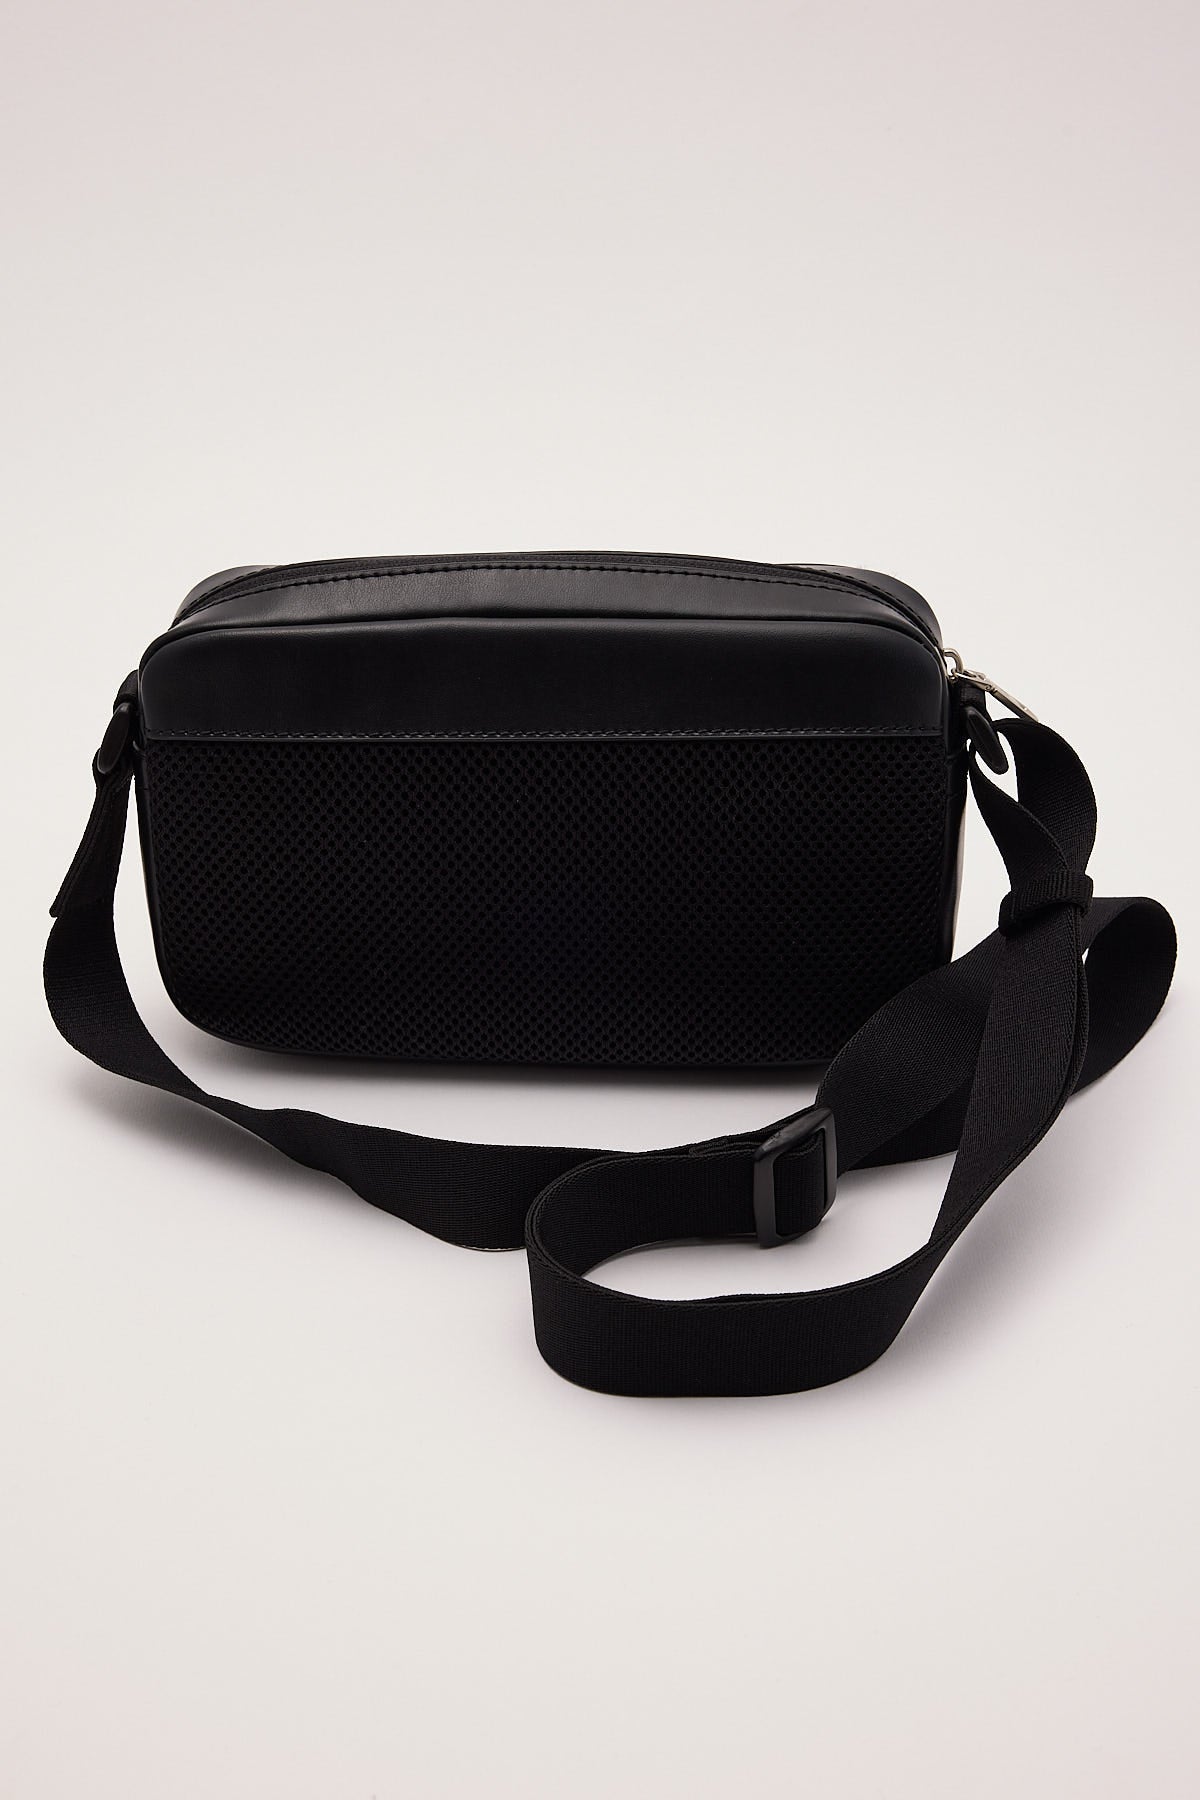 Calvin Klein Monogram Soft Camera Bag Black